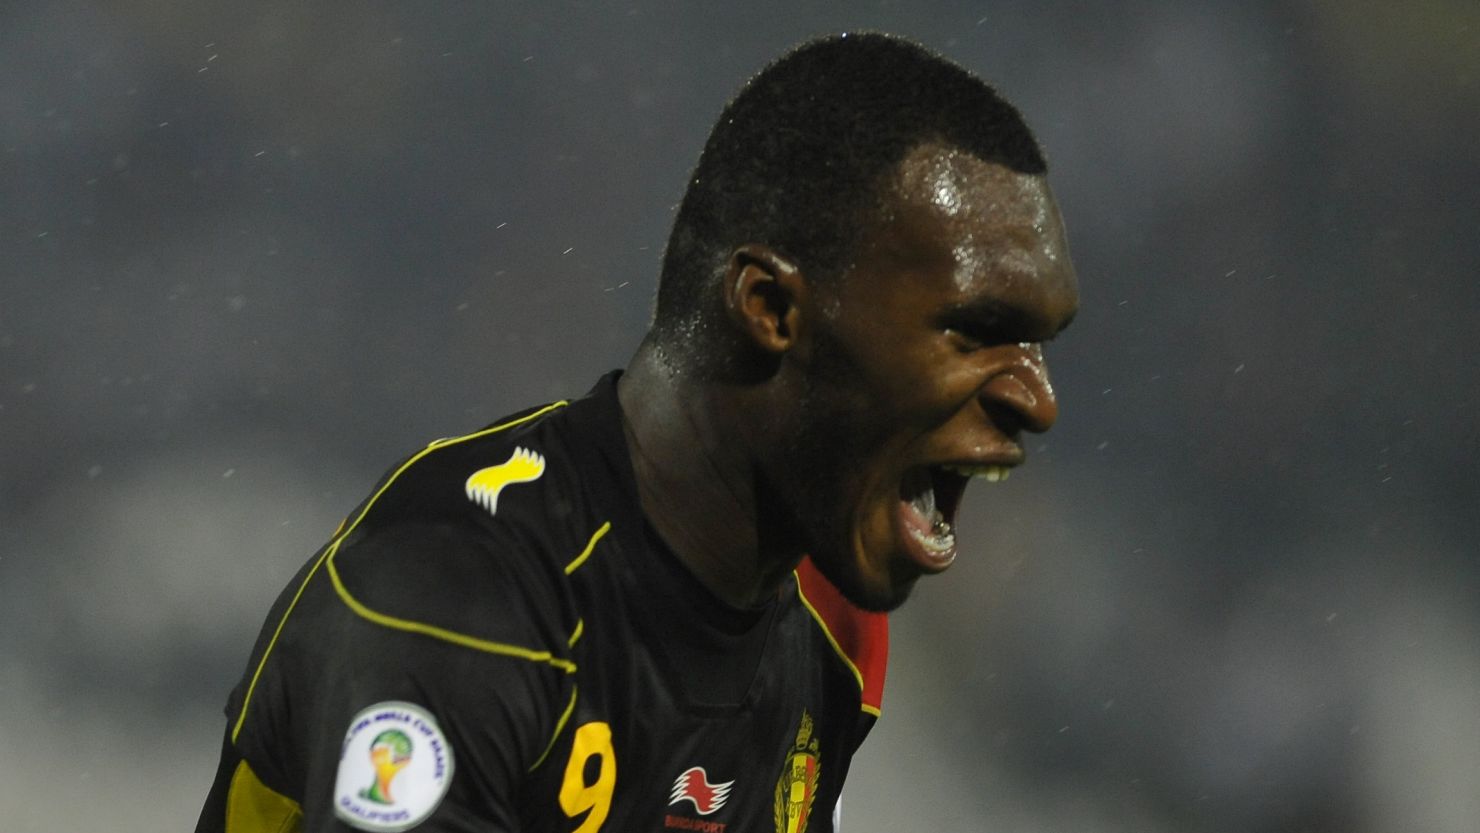 Born in the Democratic Republic of Congo's capital of Kinshasa, Benteke has scored 9 goals in 28 appearances for Belgium